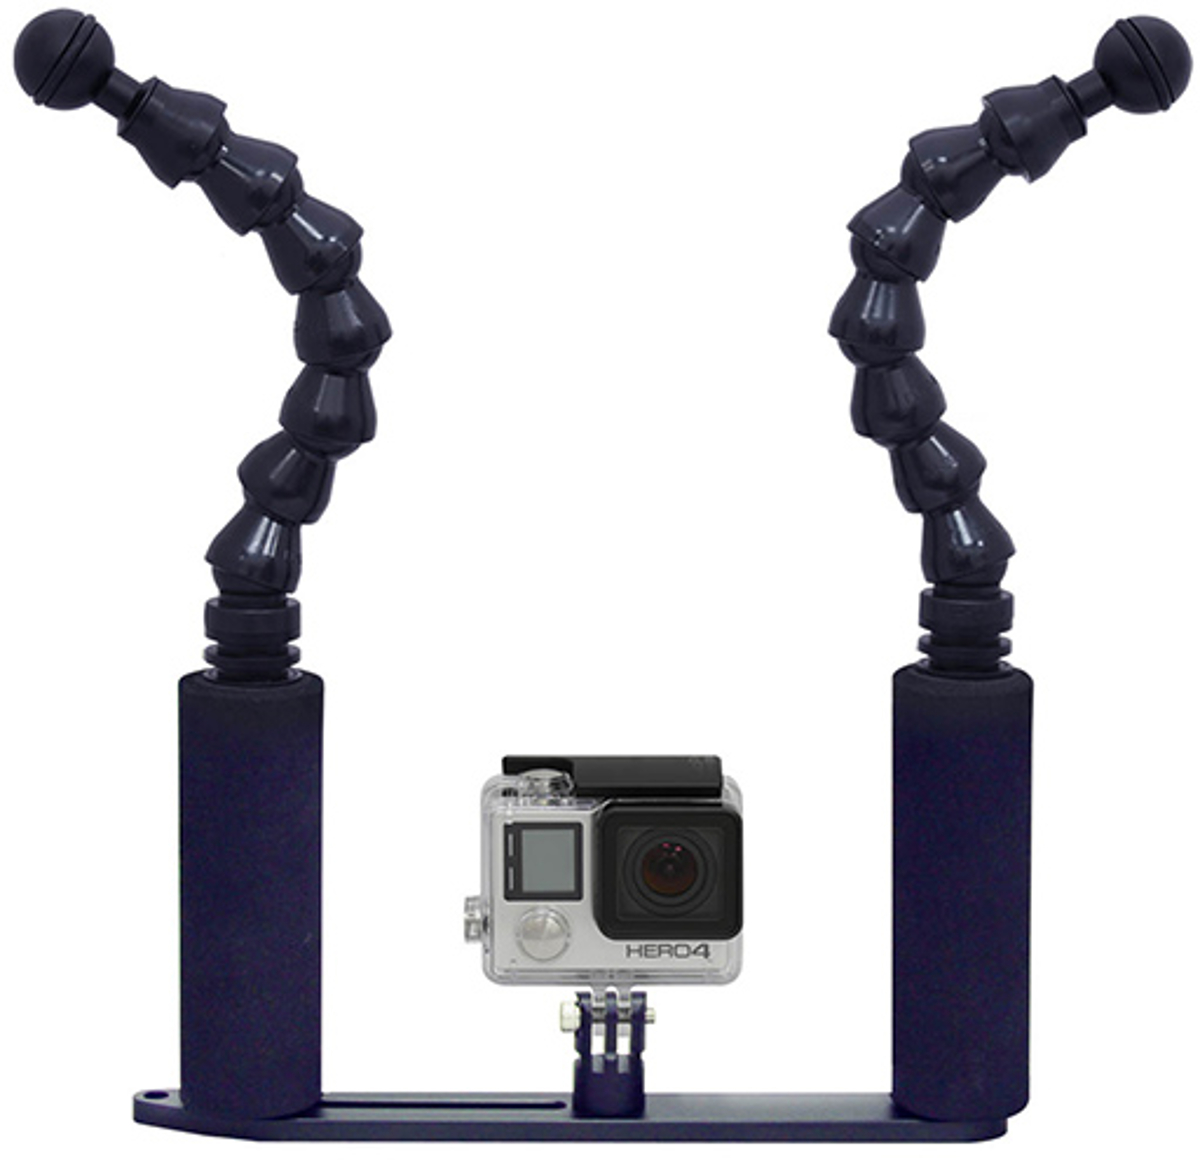 BigBlue Camera Tray with Dual Flexi Arms